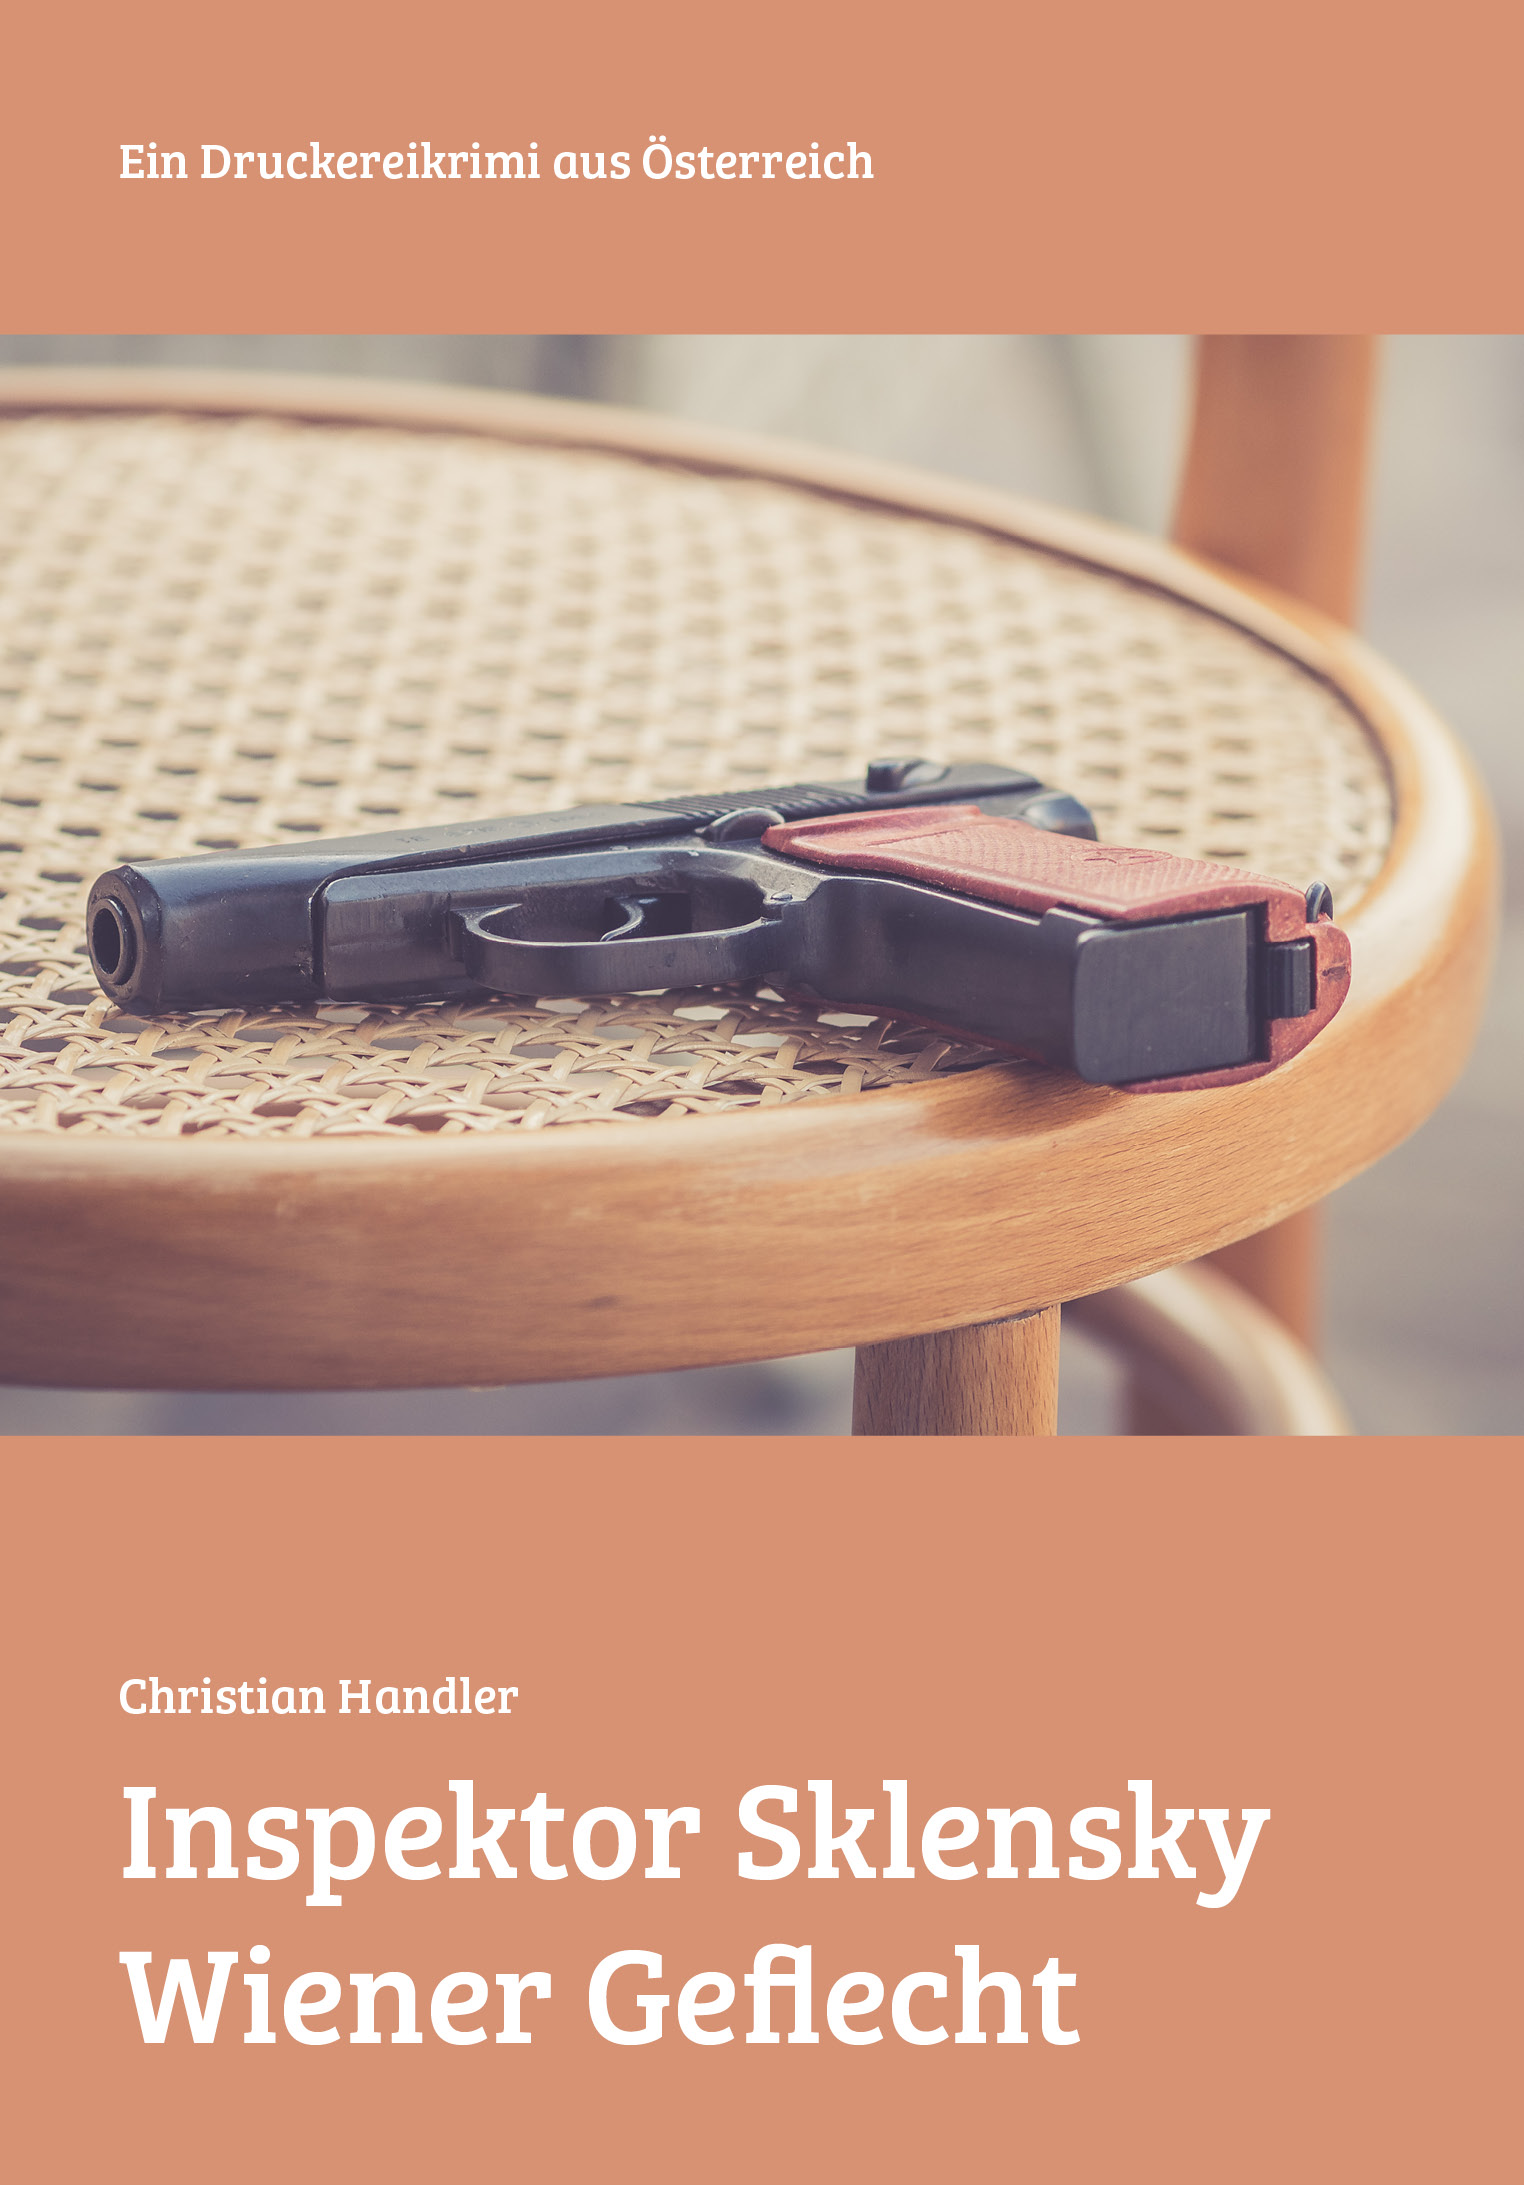 Inspektor Sklensky: Wiener Geflecht, Christian Handler